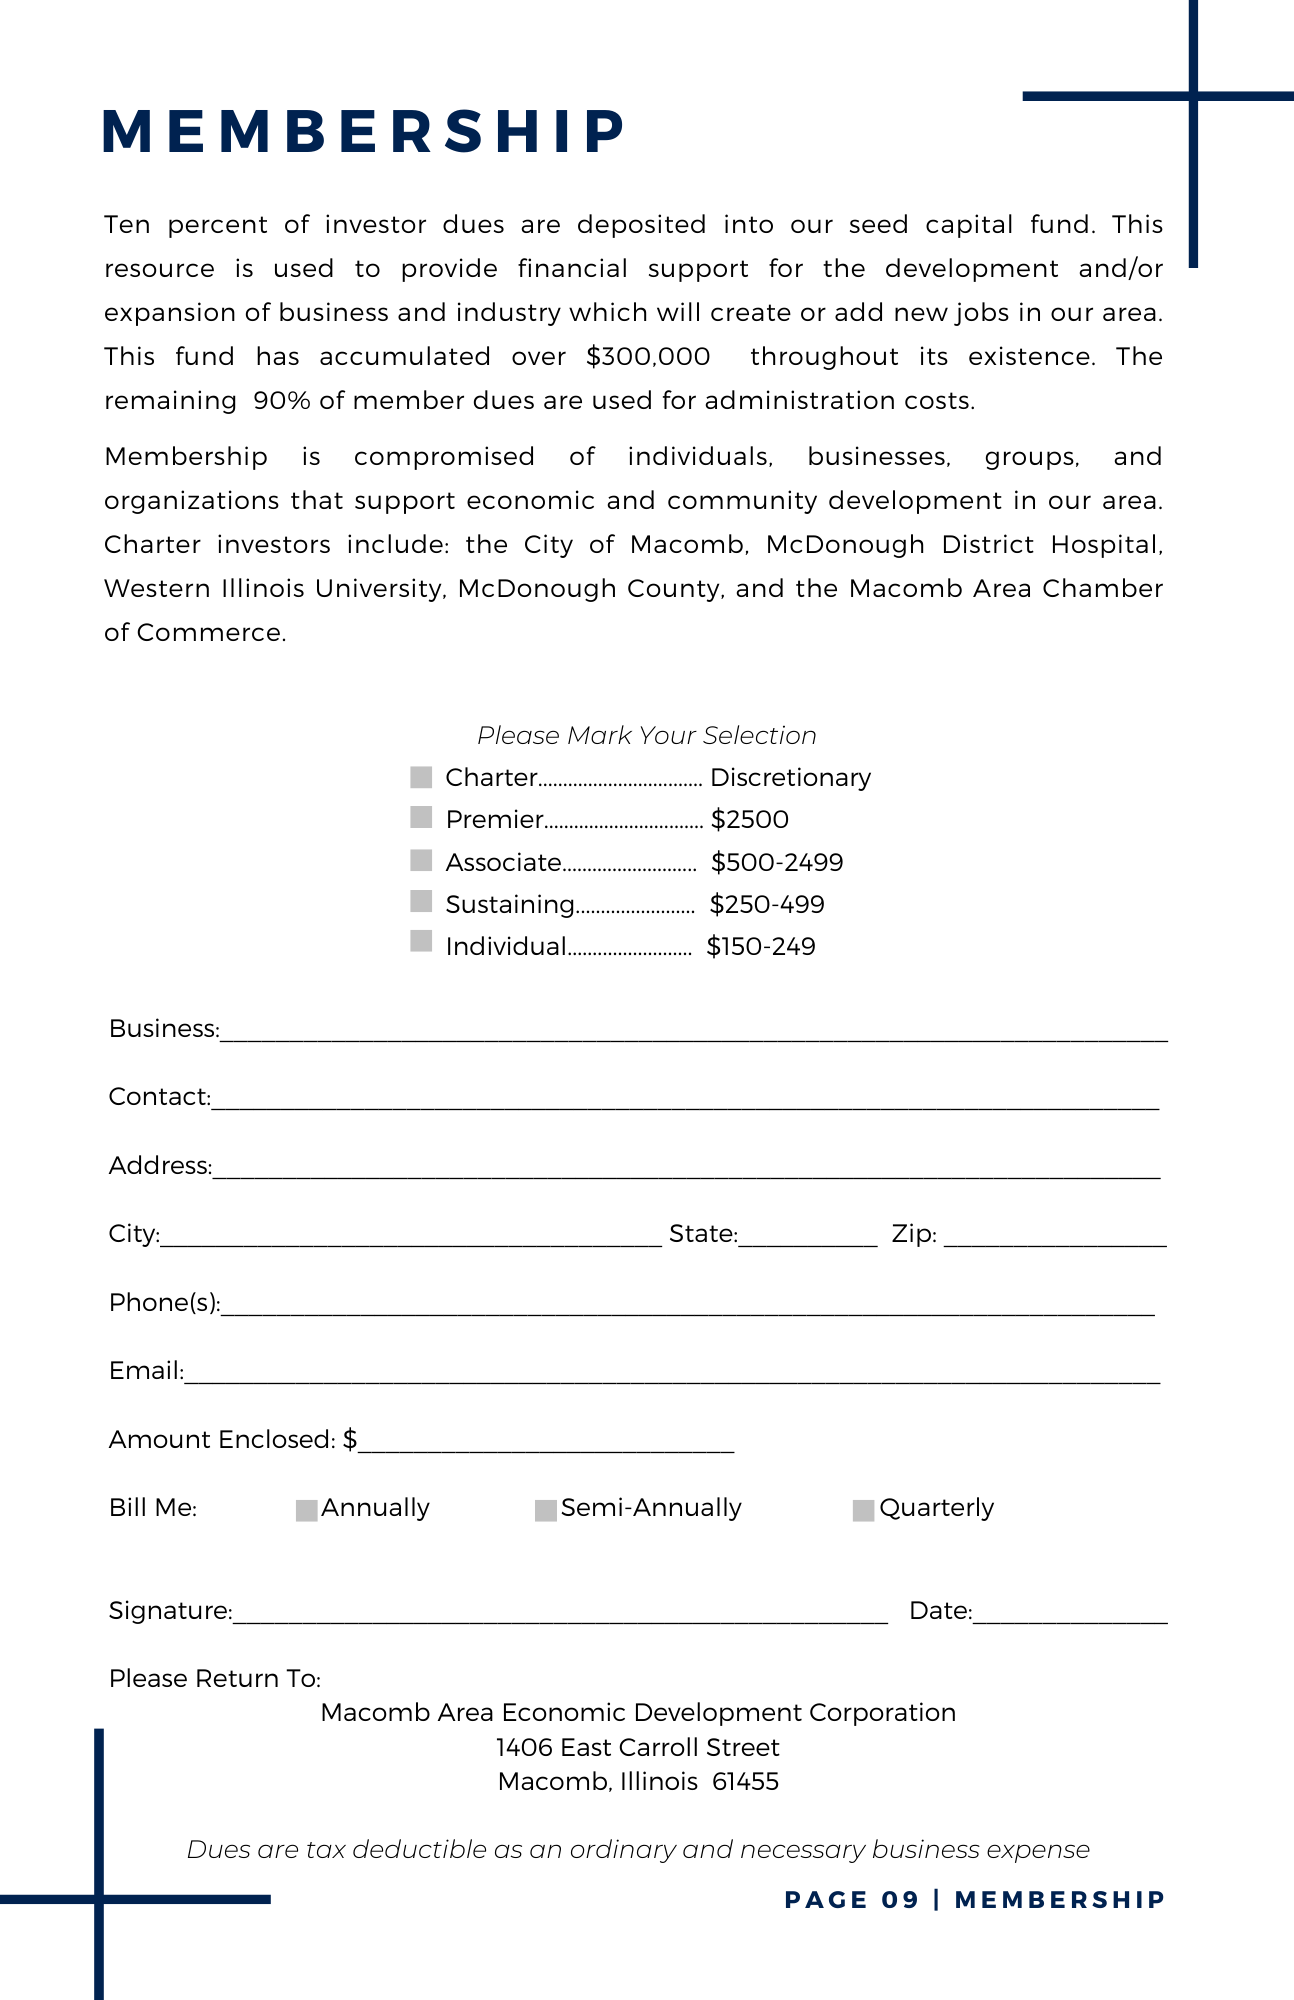 Membership Brochure Macomb Area Economic Development Corporation 2684